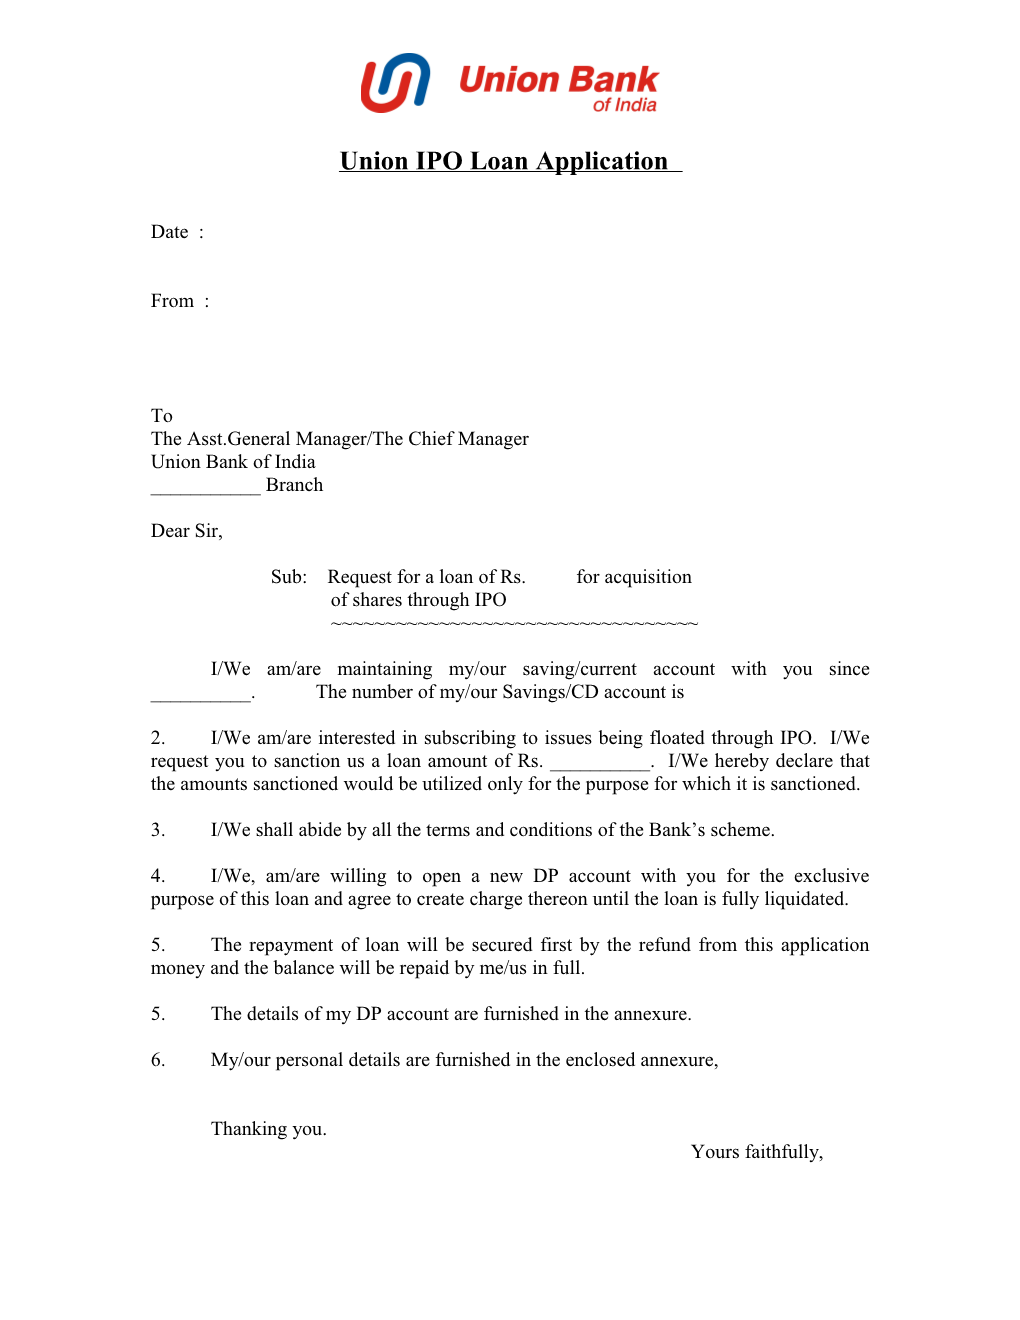 Union IPO Loan Application